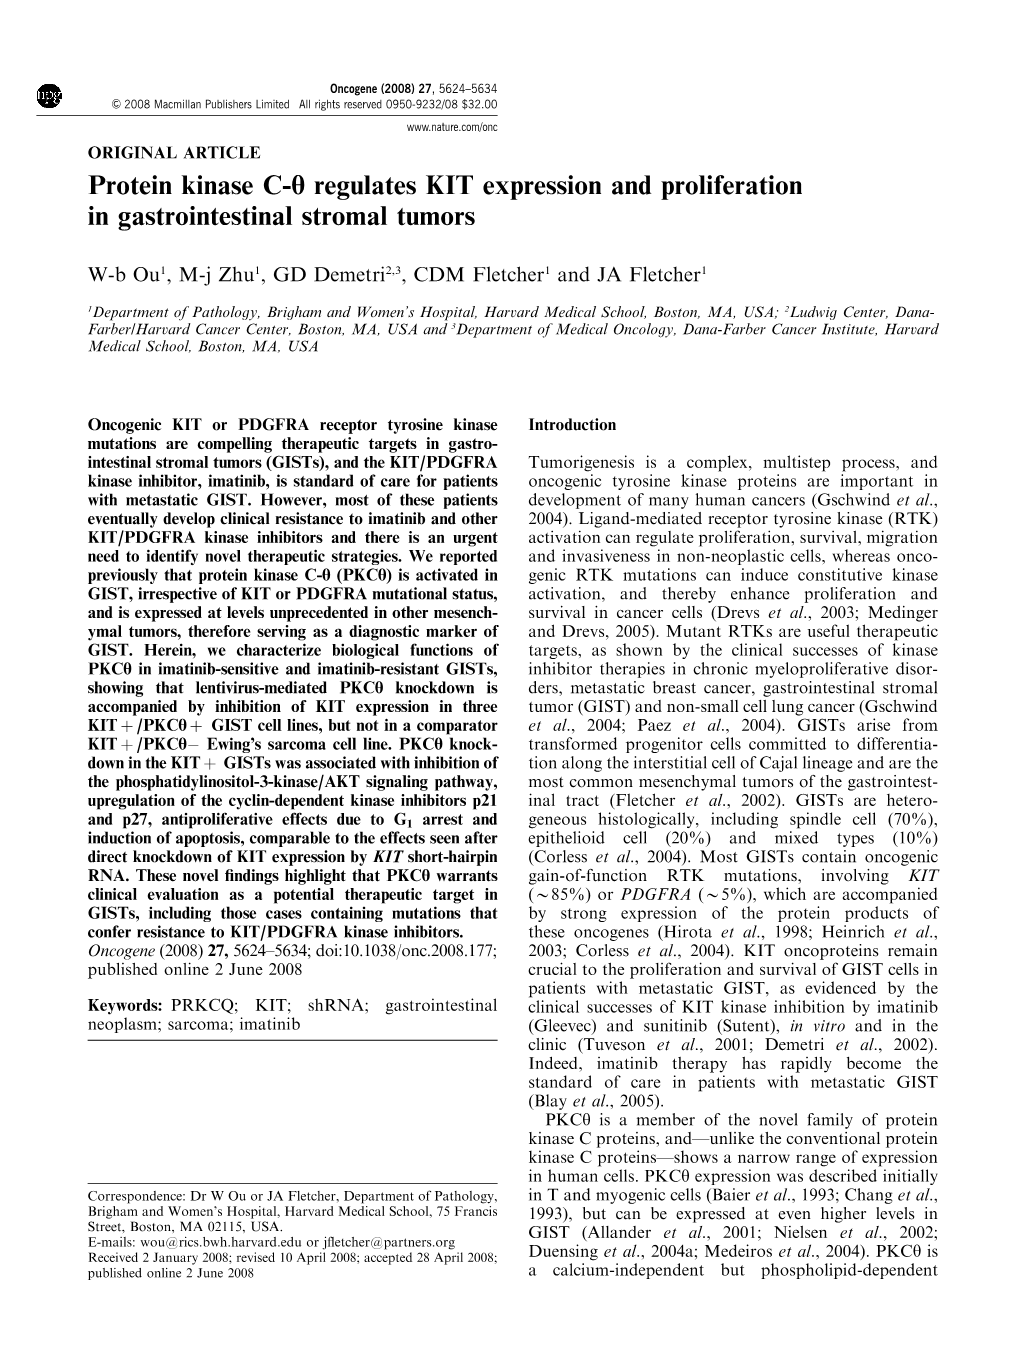 Protein Kinase C-H Regulates KIT Expression and Proliferation in Gastrointestinal Stromal Tumors